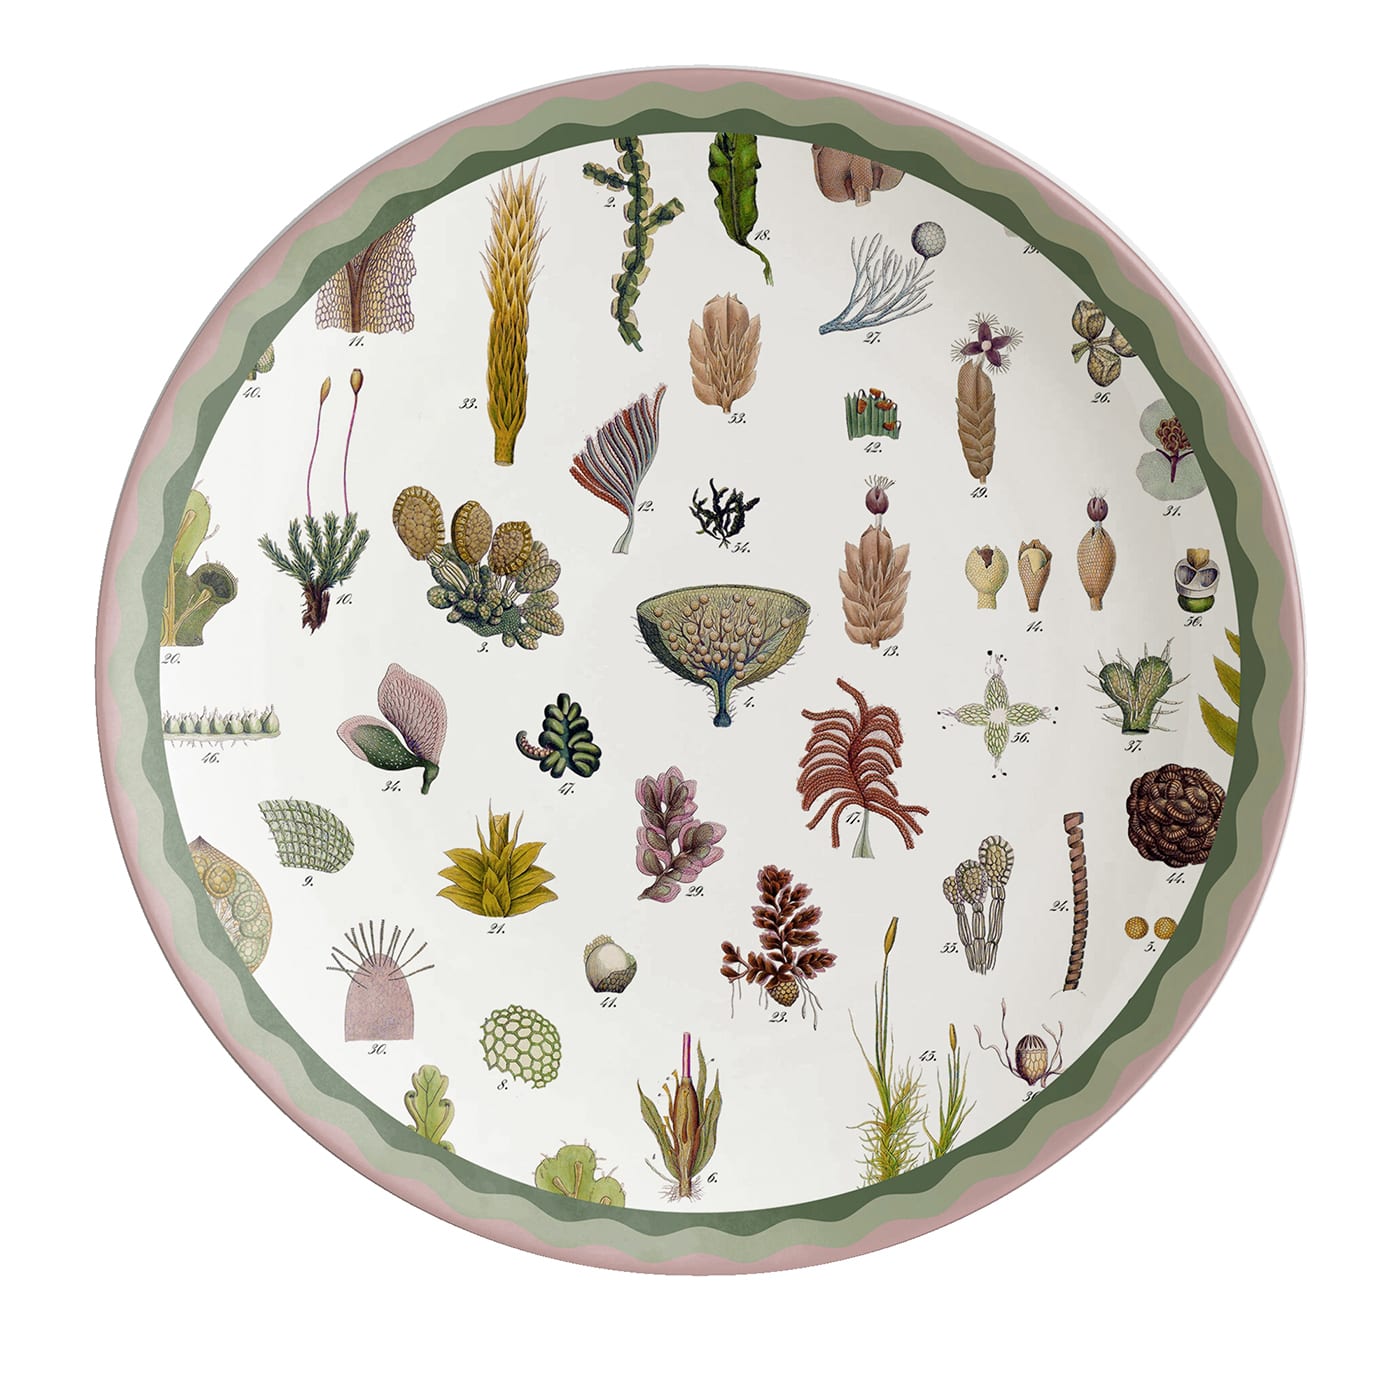 Cabinet de Curiosités Seaweed Dinner Plate - Grand Tour by Vito Nesta